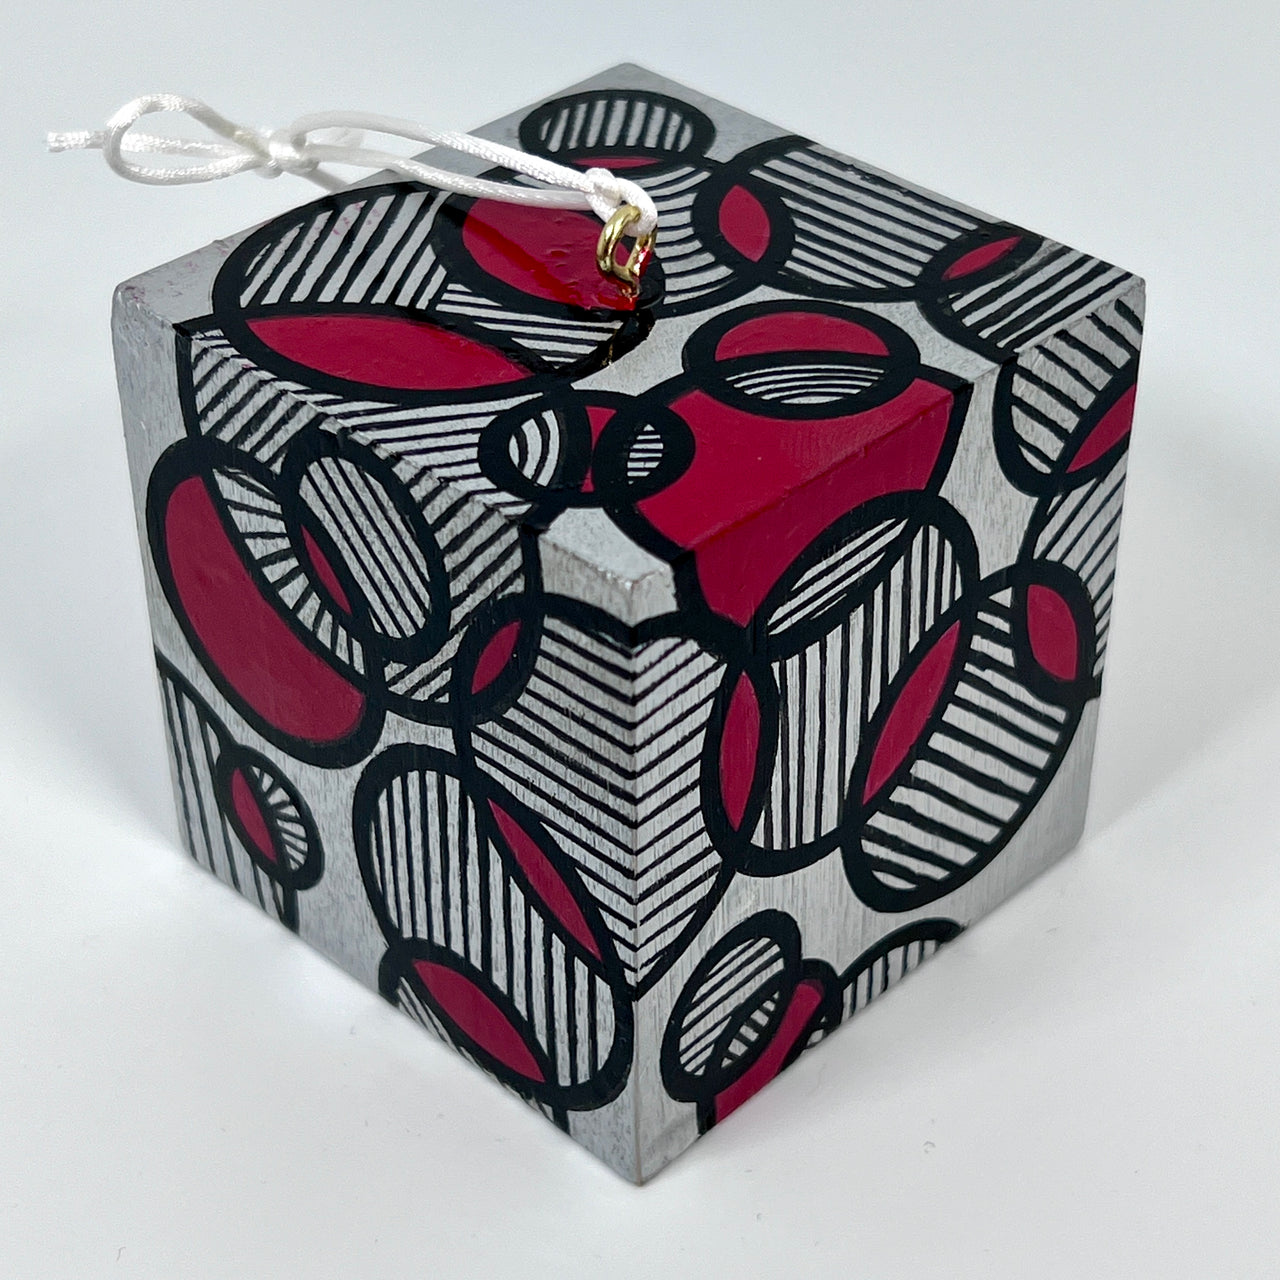 #5 - 3D Cube Art - 2.25" cube